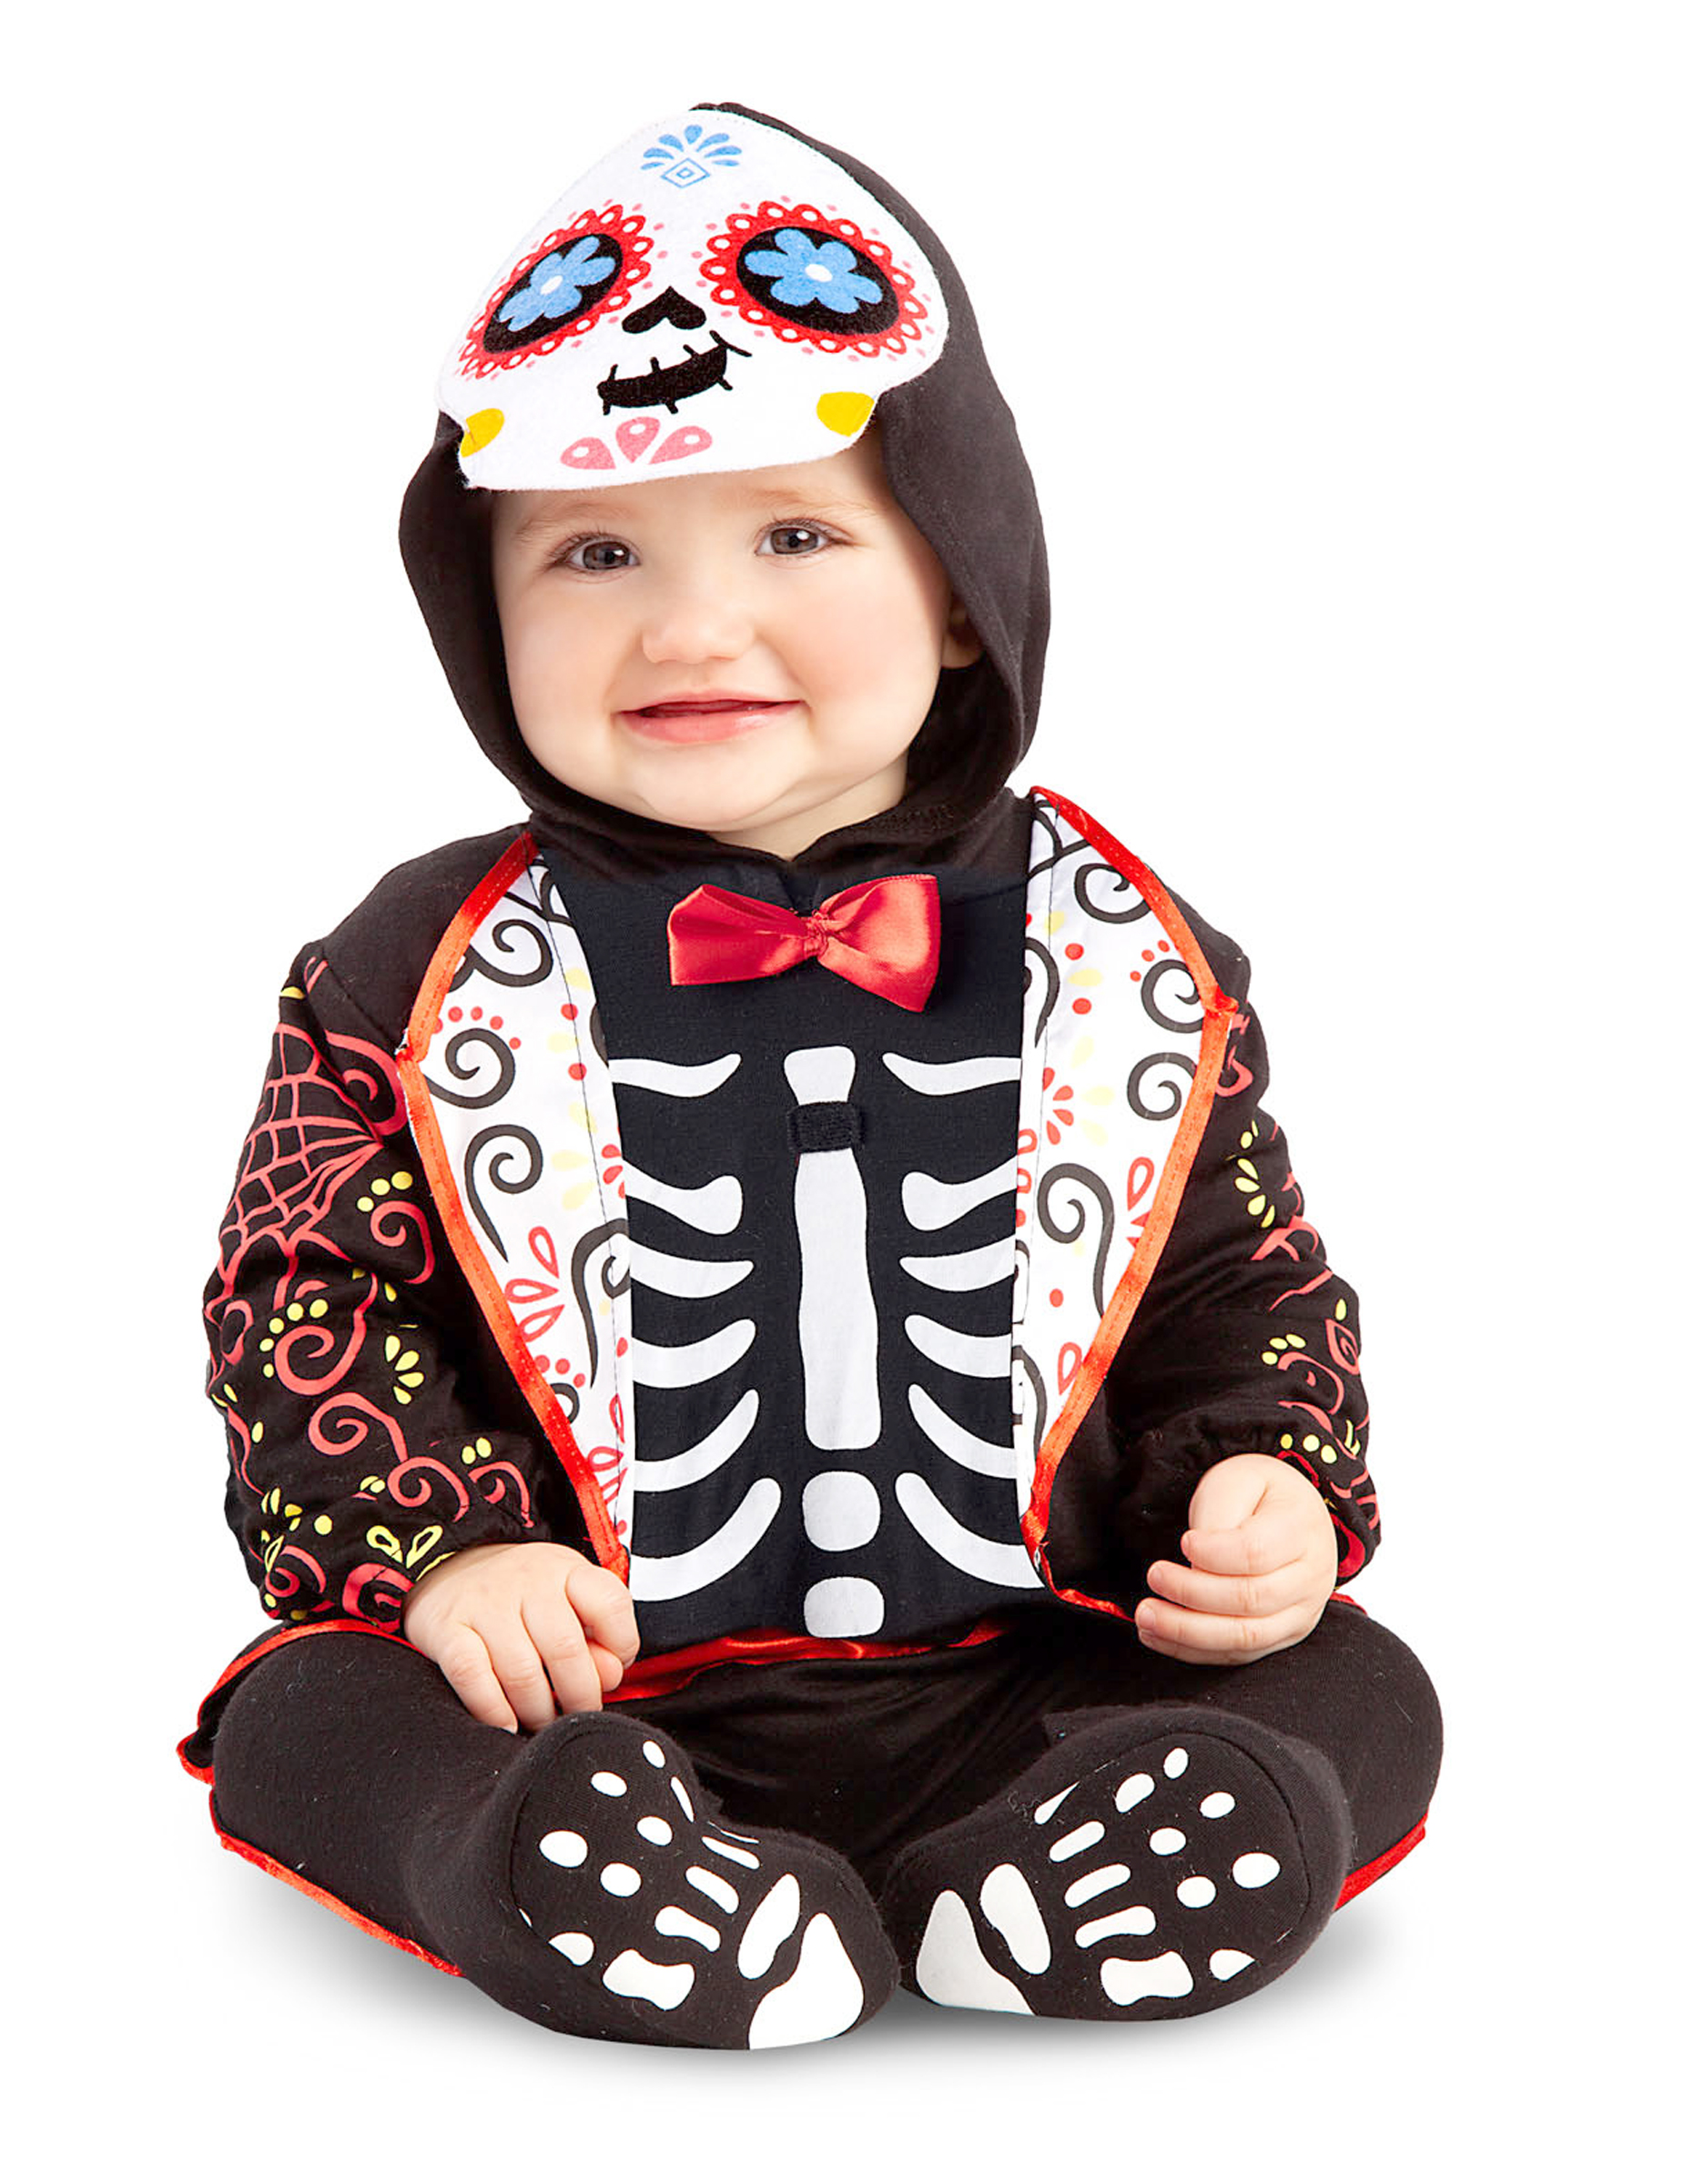 Blumiges Dia de los Muertos-Babykostüm für Halloween bunt von VIVING COSTUMES / JUINSA